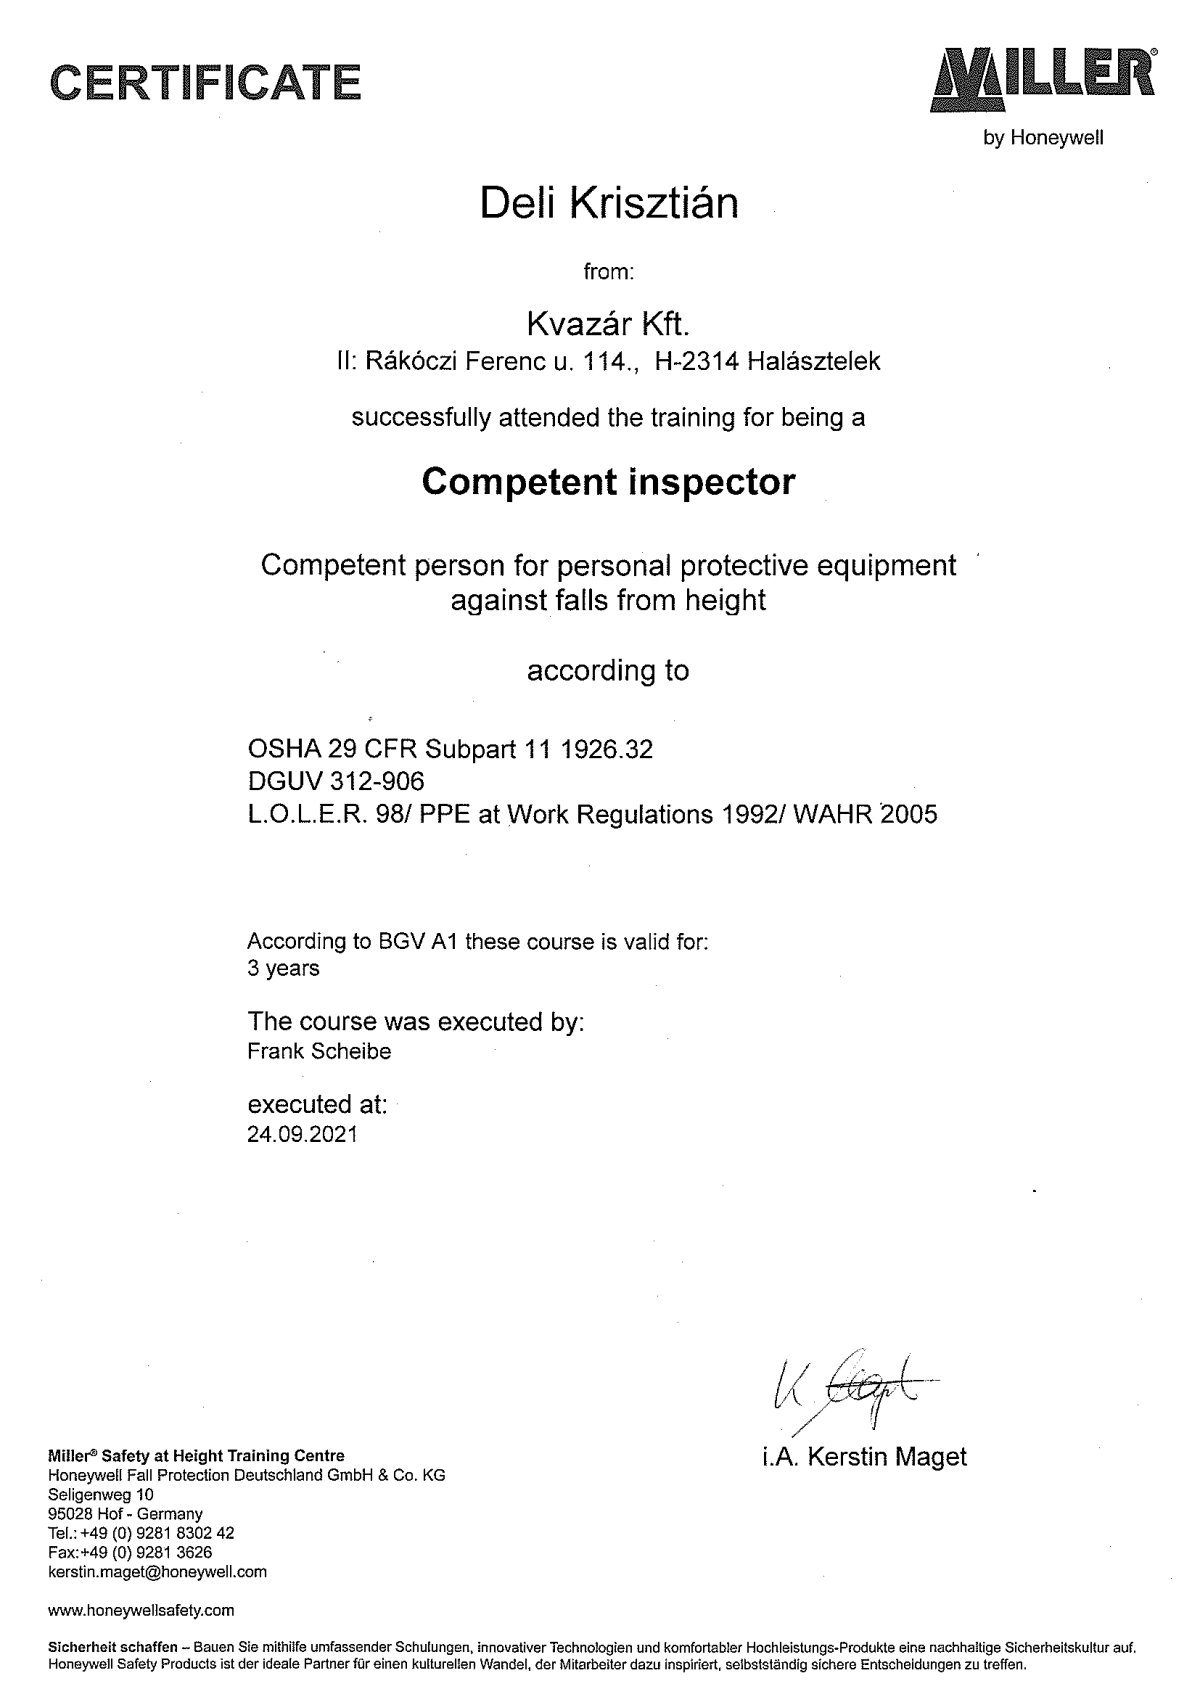 certificate_of_training_deli_krisztian.jpg